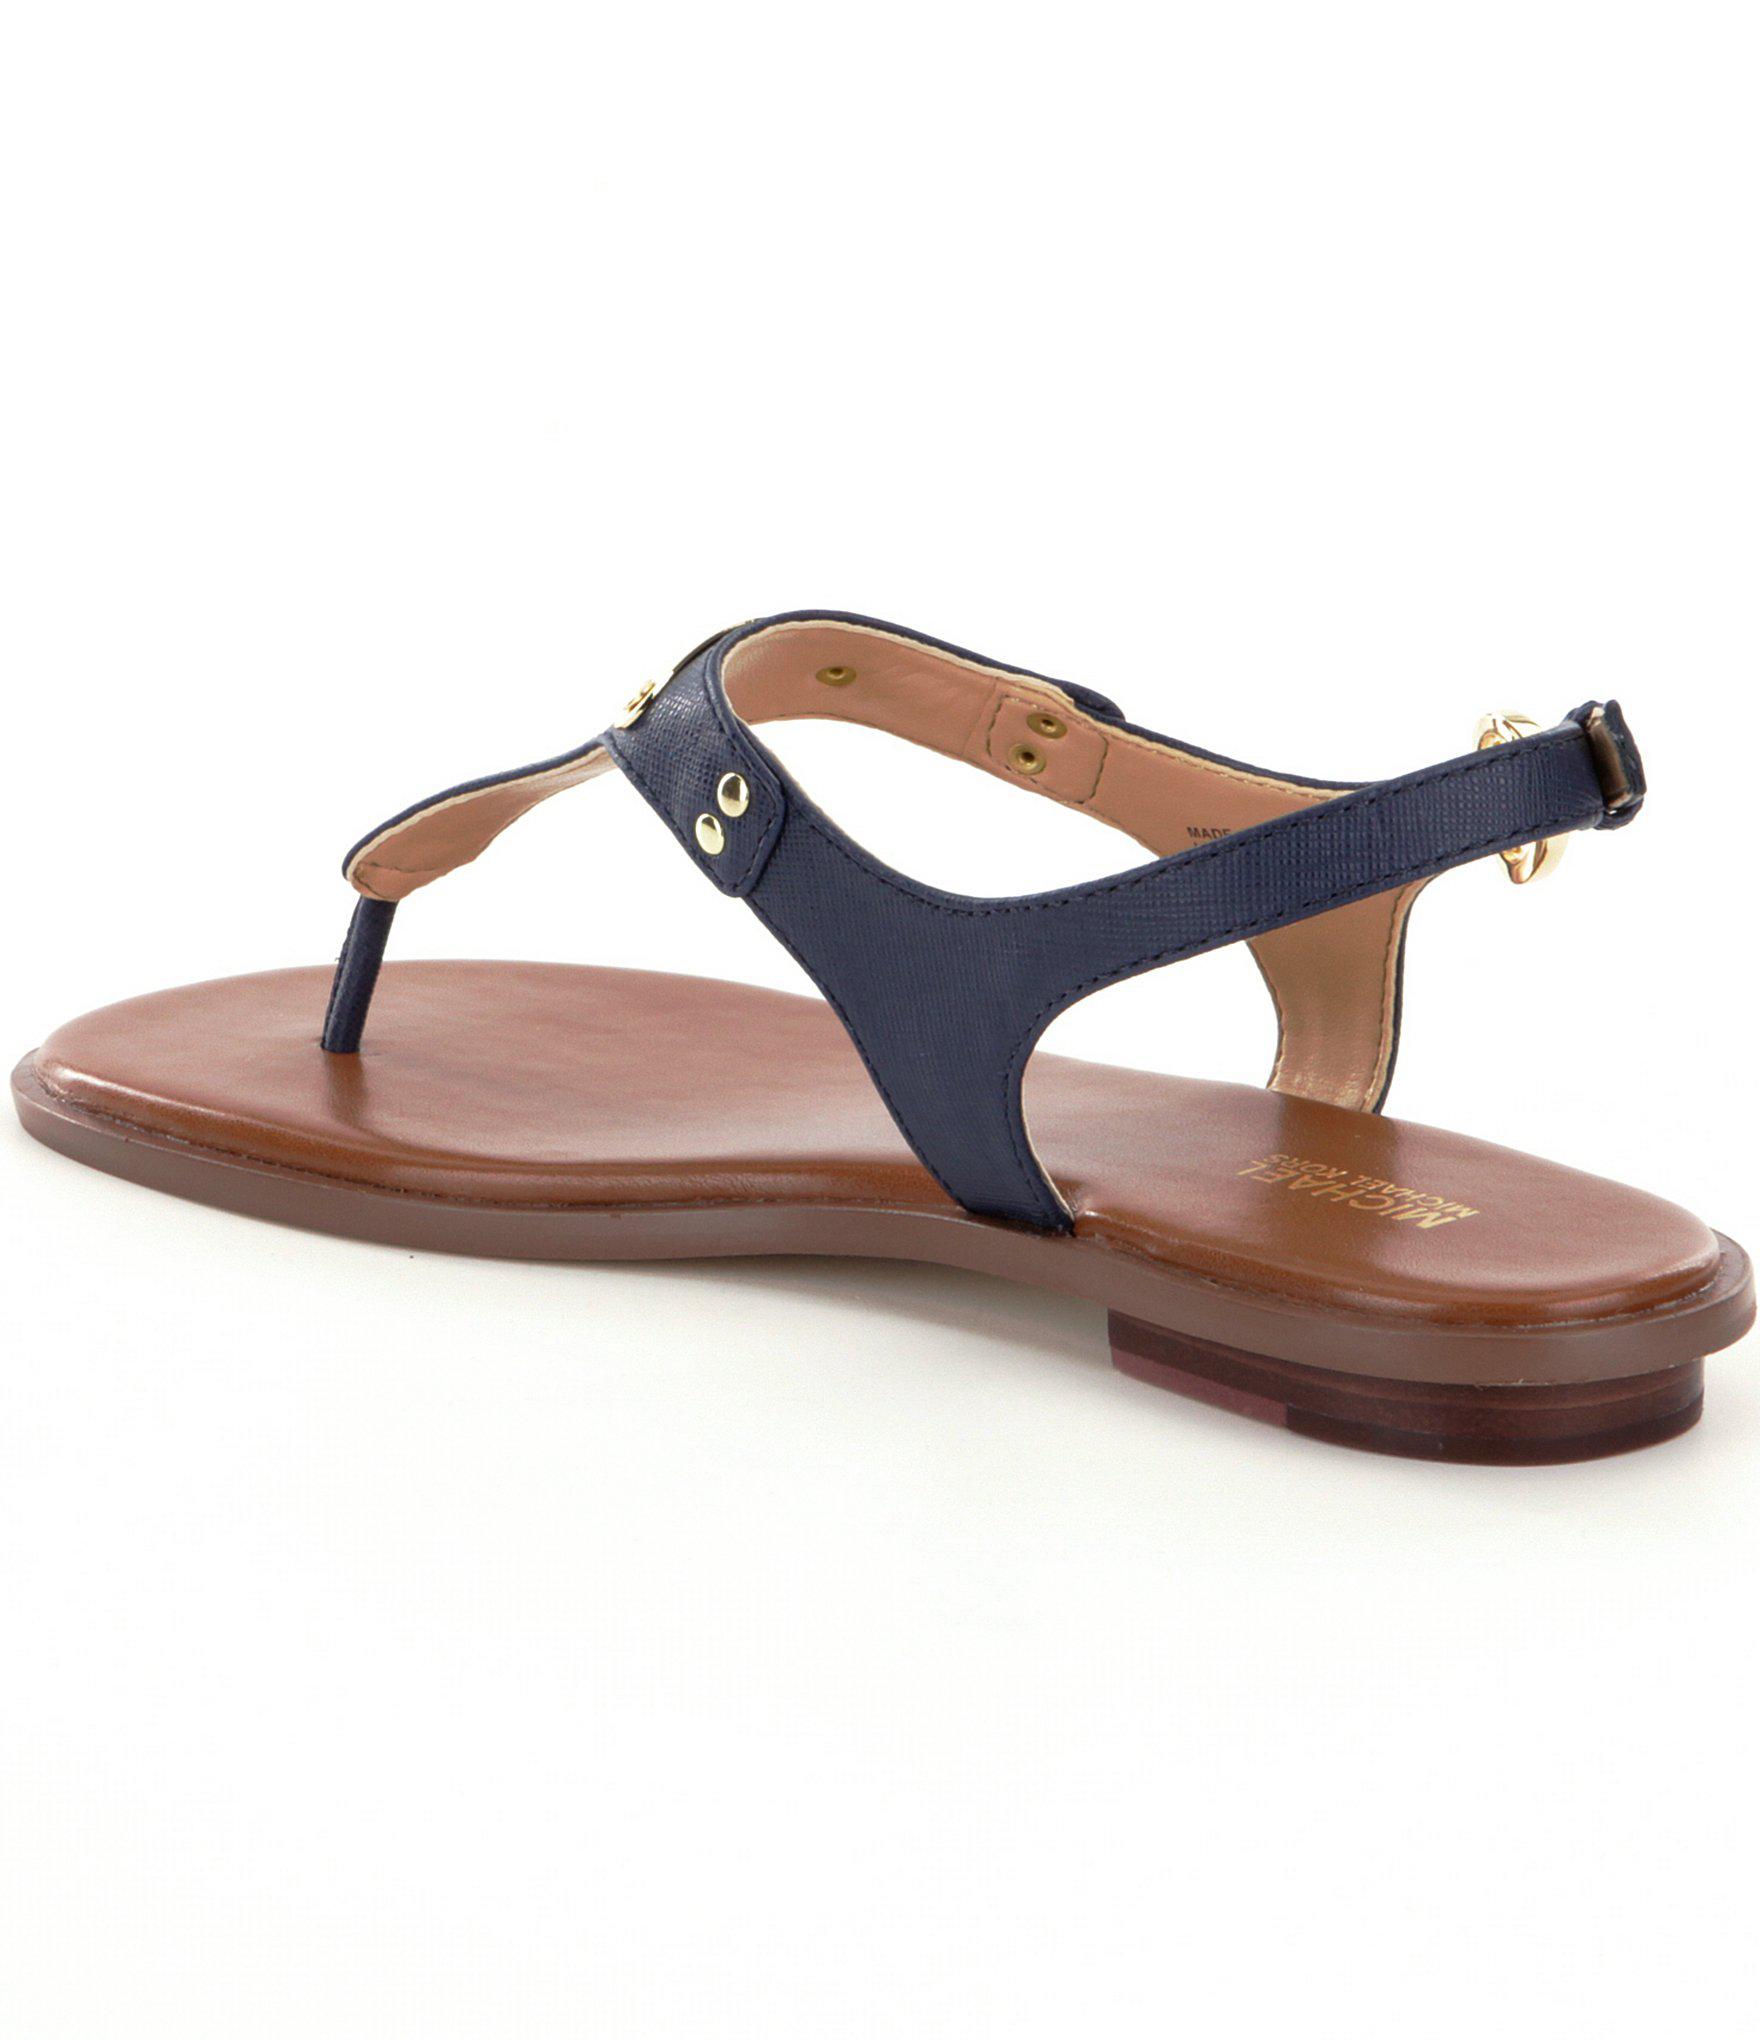 Michael Kors Mk Plate Flat Thong Sandals in Fuschia (Blue) - Lyst